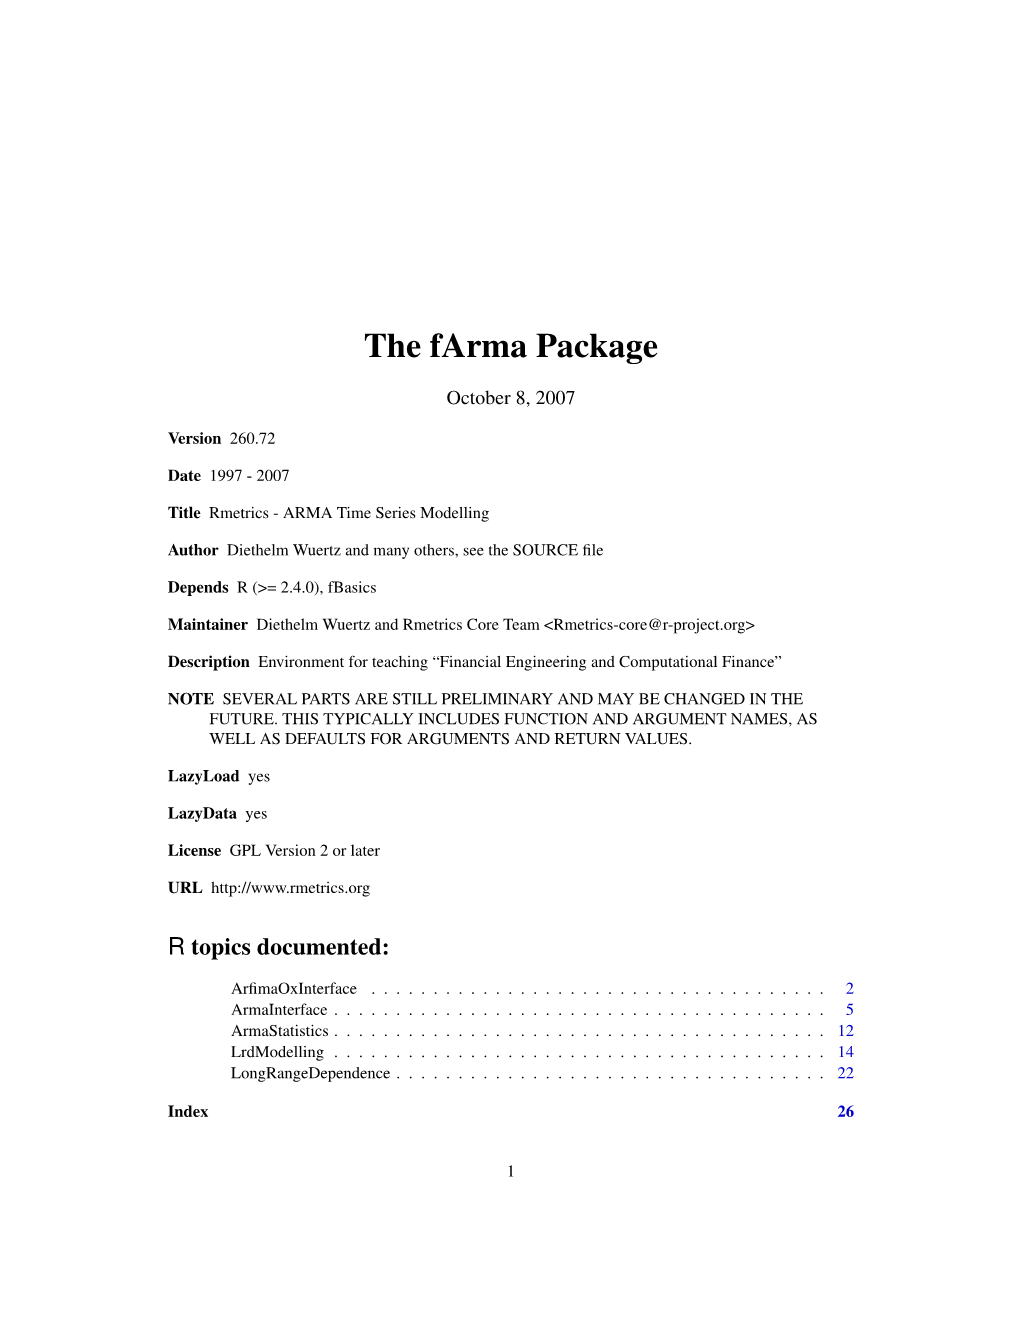 The Farma Package